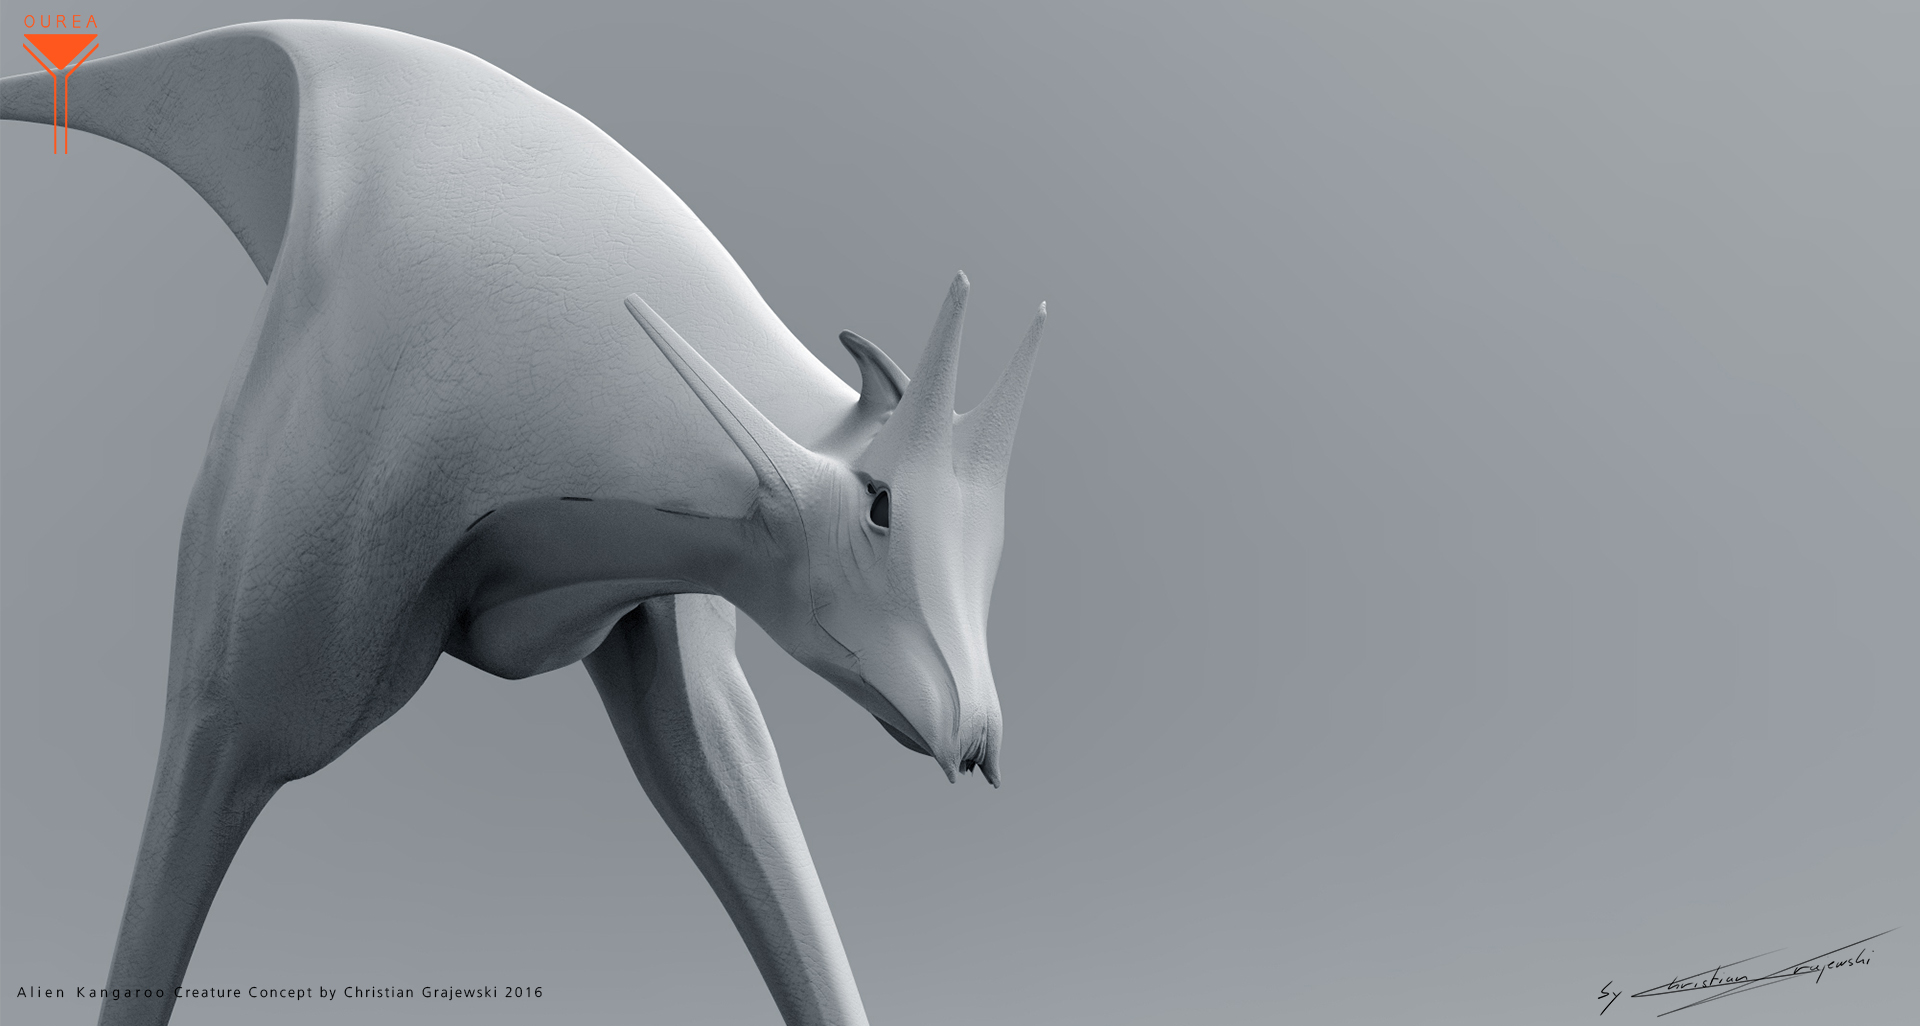 Alien Kangaroo Creature Concept 02 by Christian Grajewski.jpg